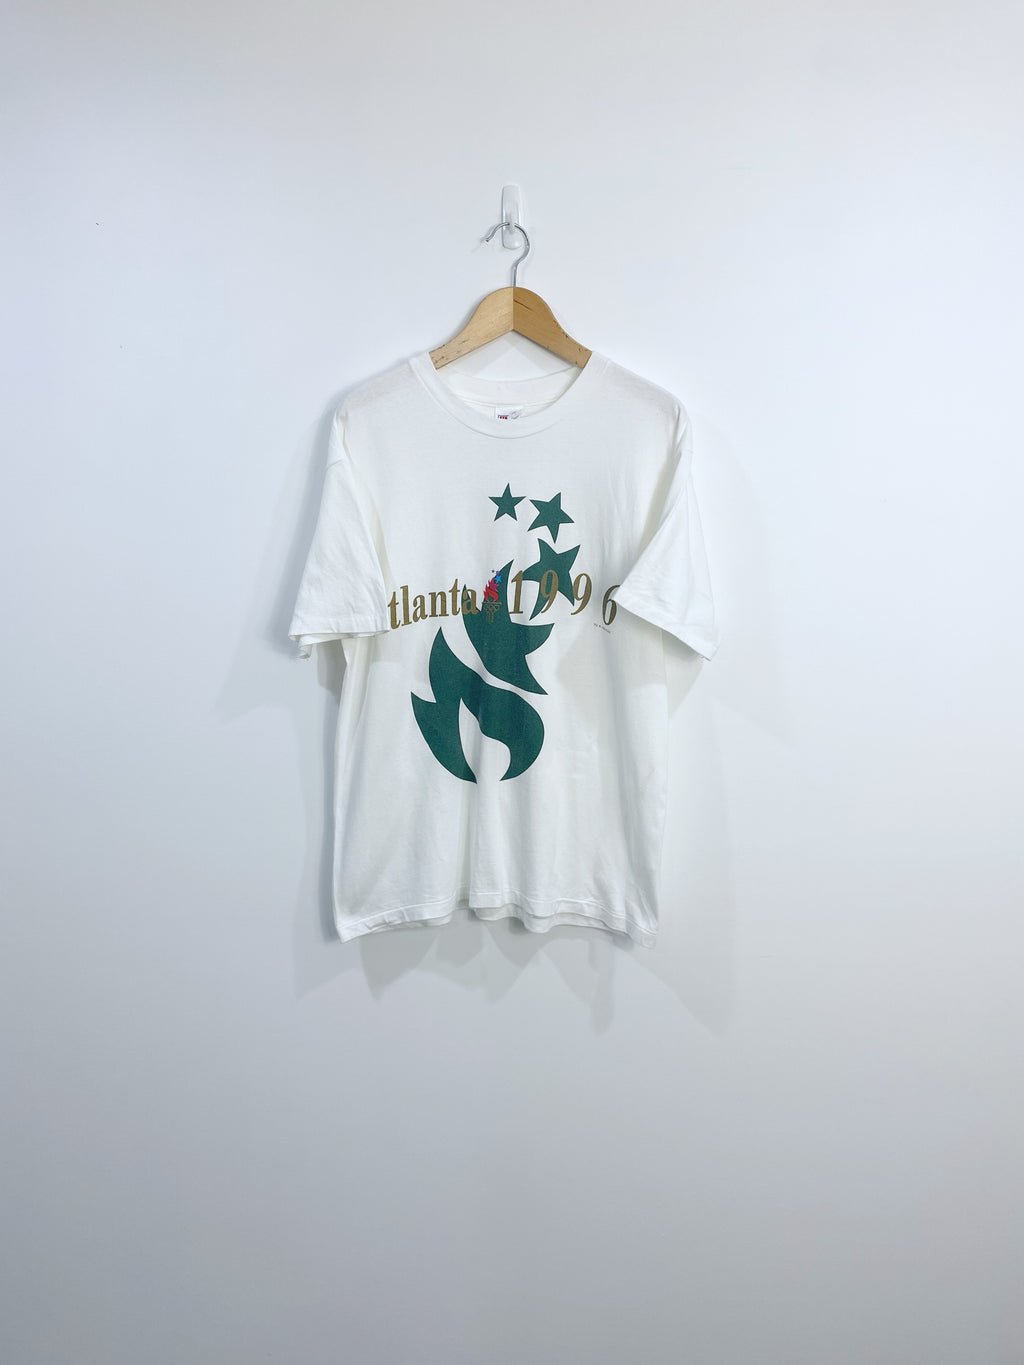 Vintage 1996 Atlanta Olympics T-shirt L